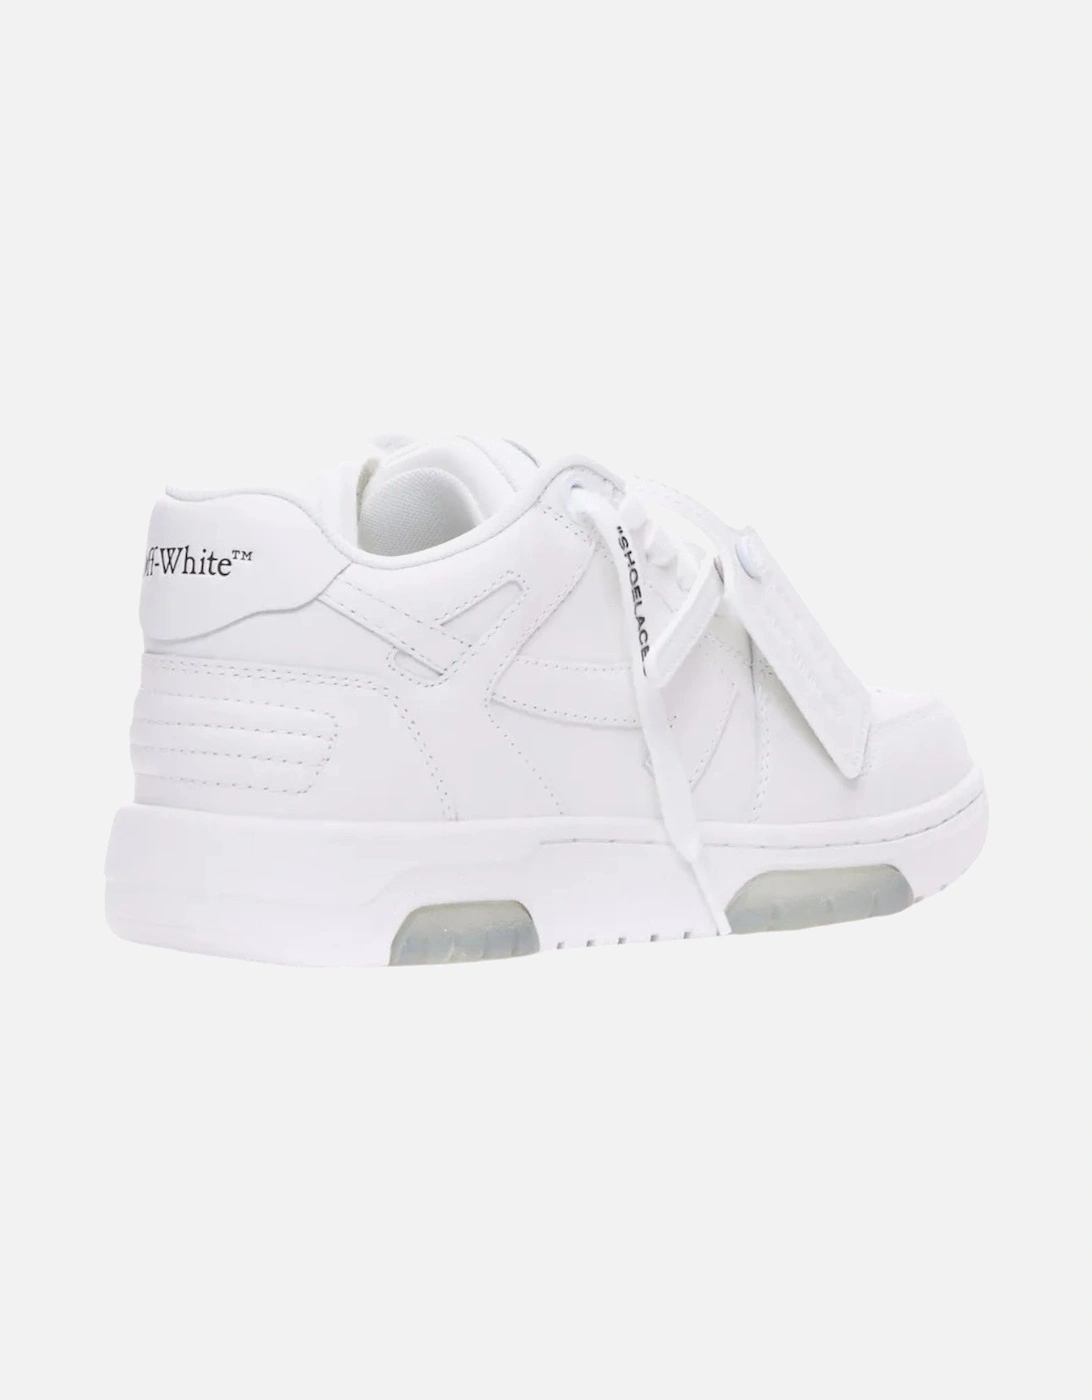 OOO White Calf Leather Sneakers